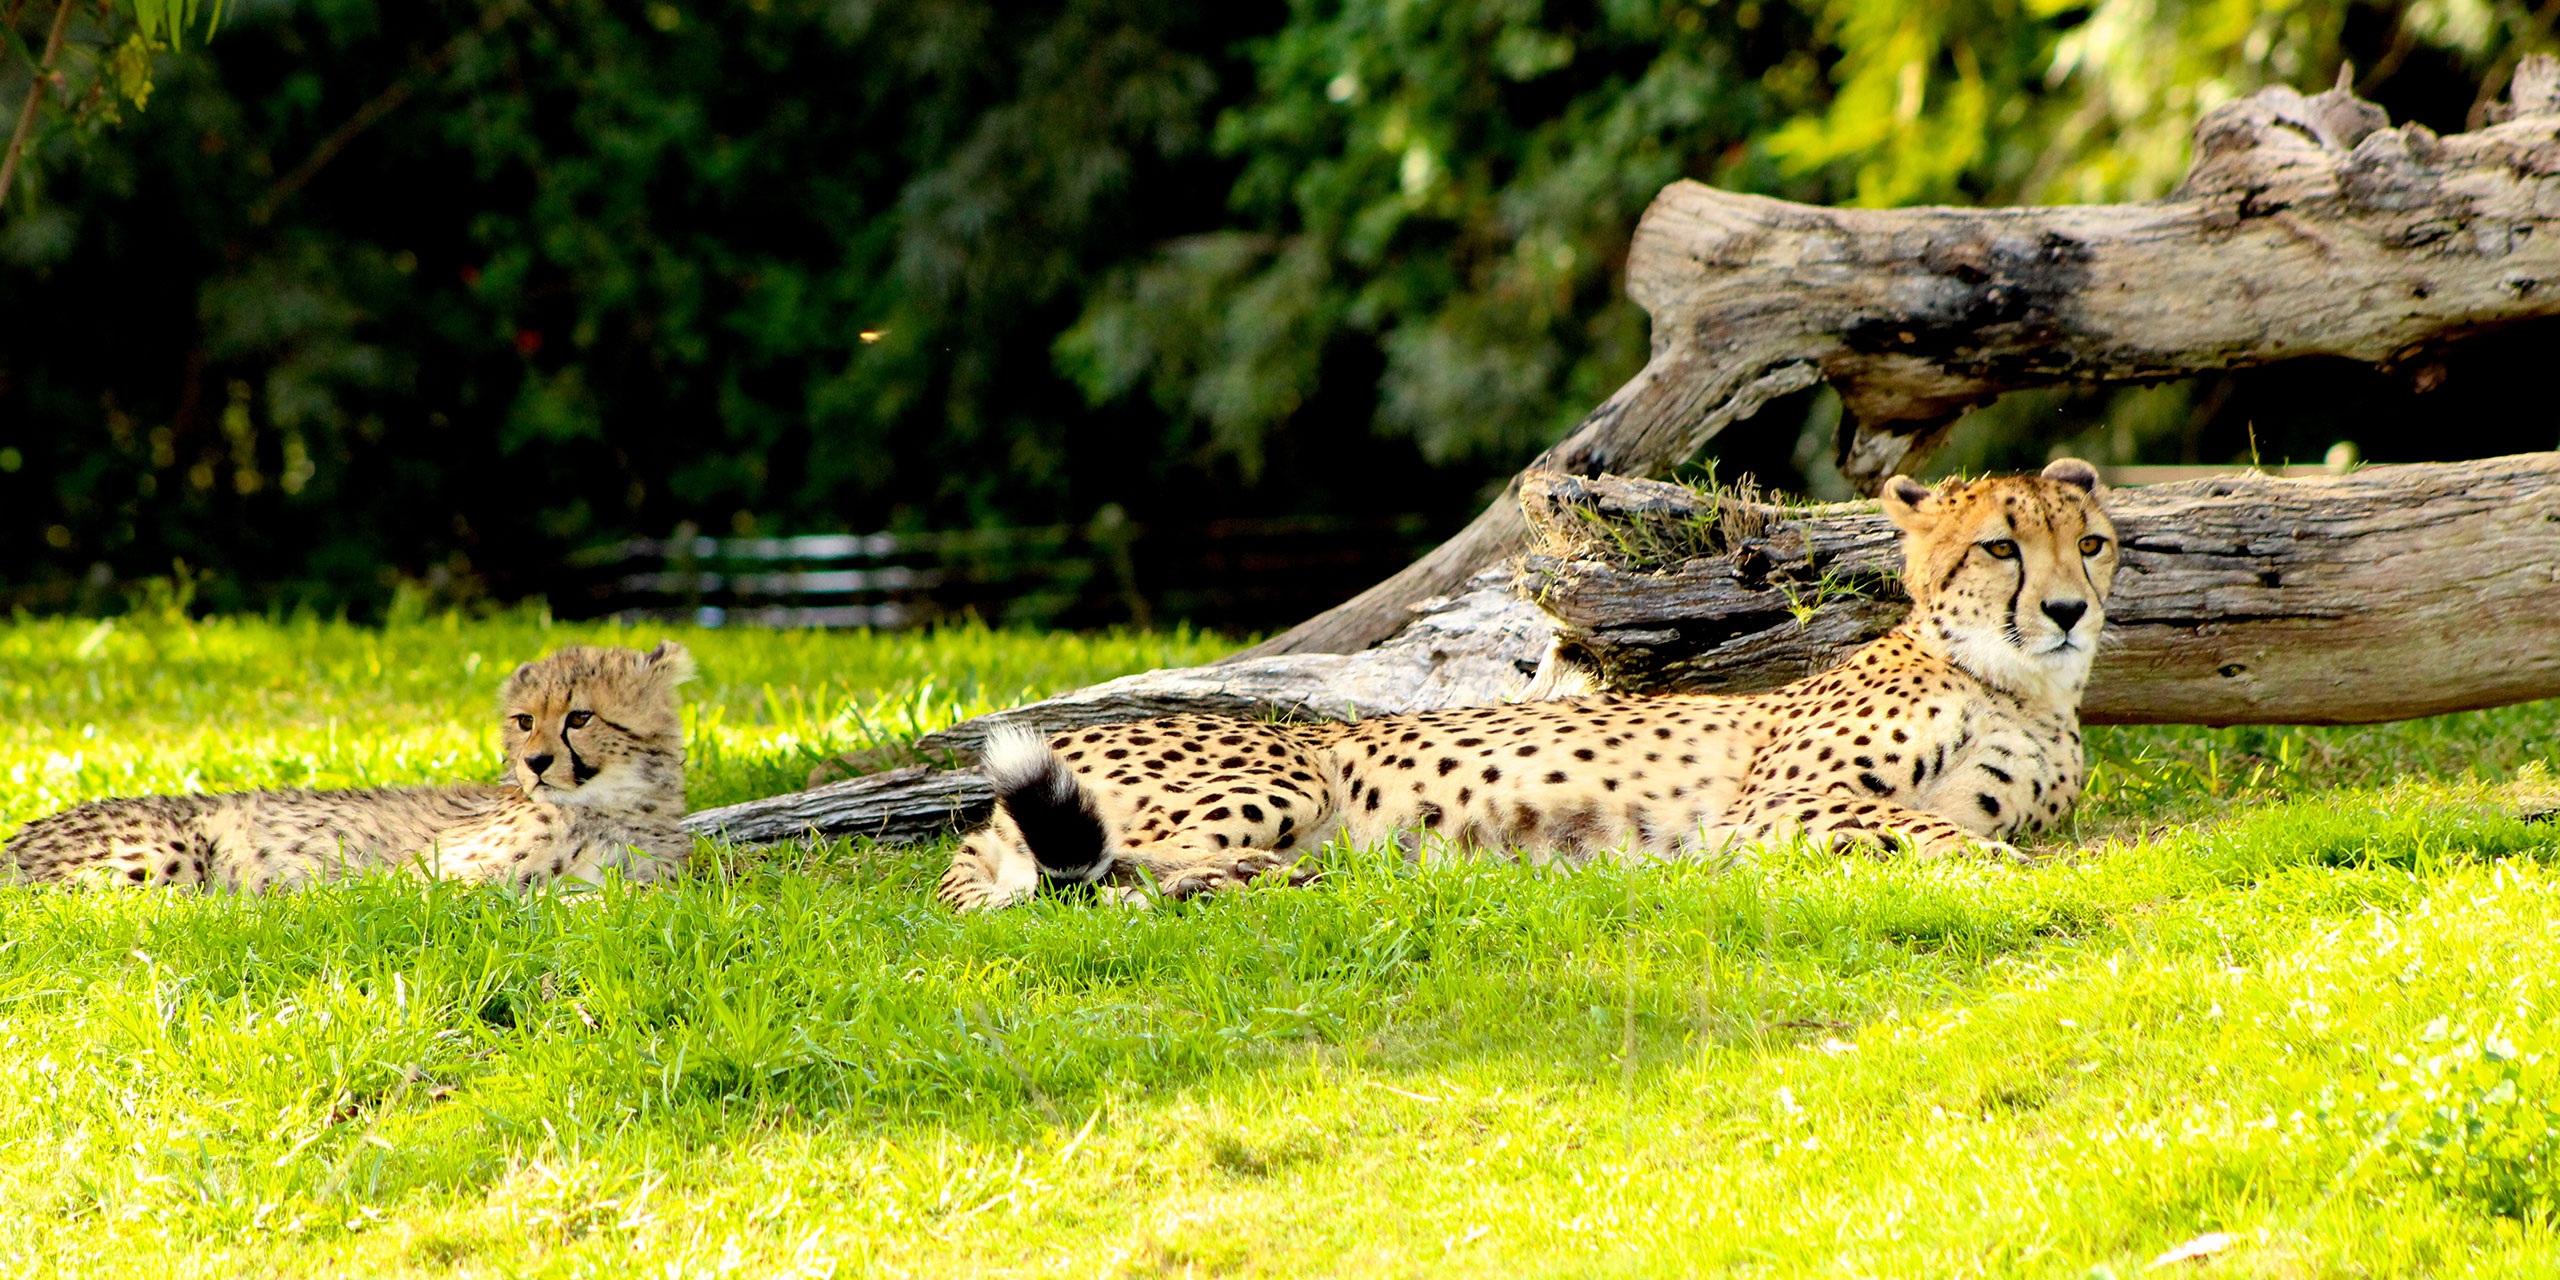 Cheetah; Liz Stepanoff/Shutterstock.com